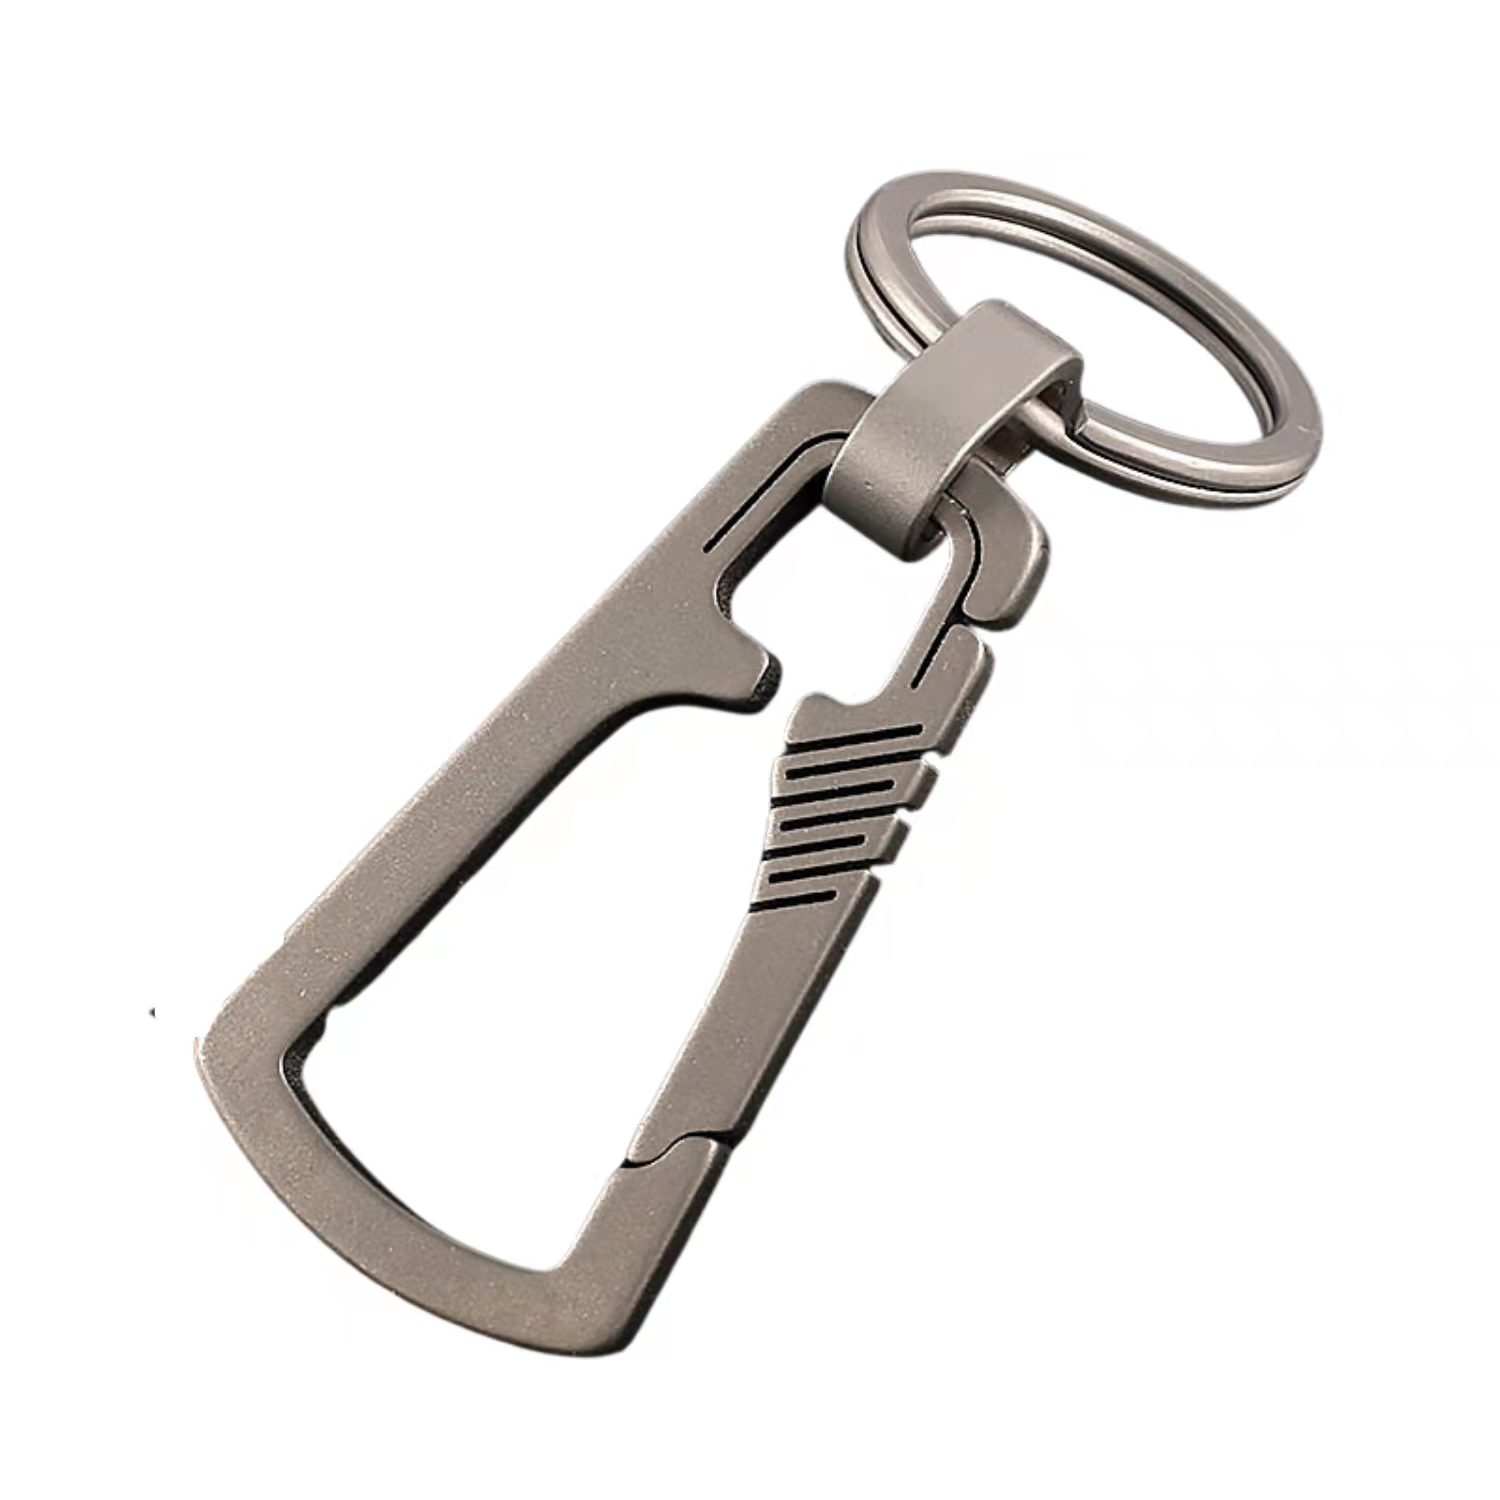 TOMSHOO Titanium Carabiner Key Chain Holder Emergency Survival Tools Silver H4Q4 